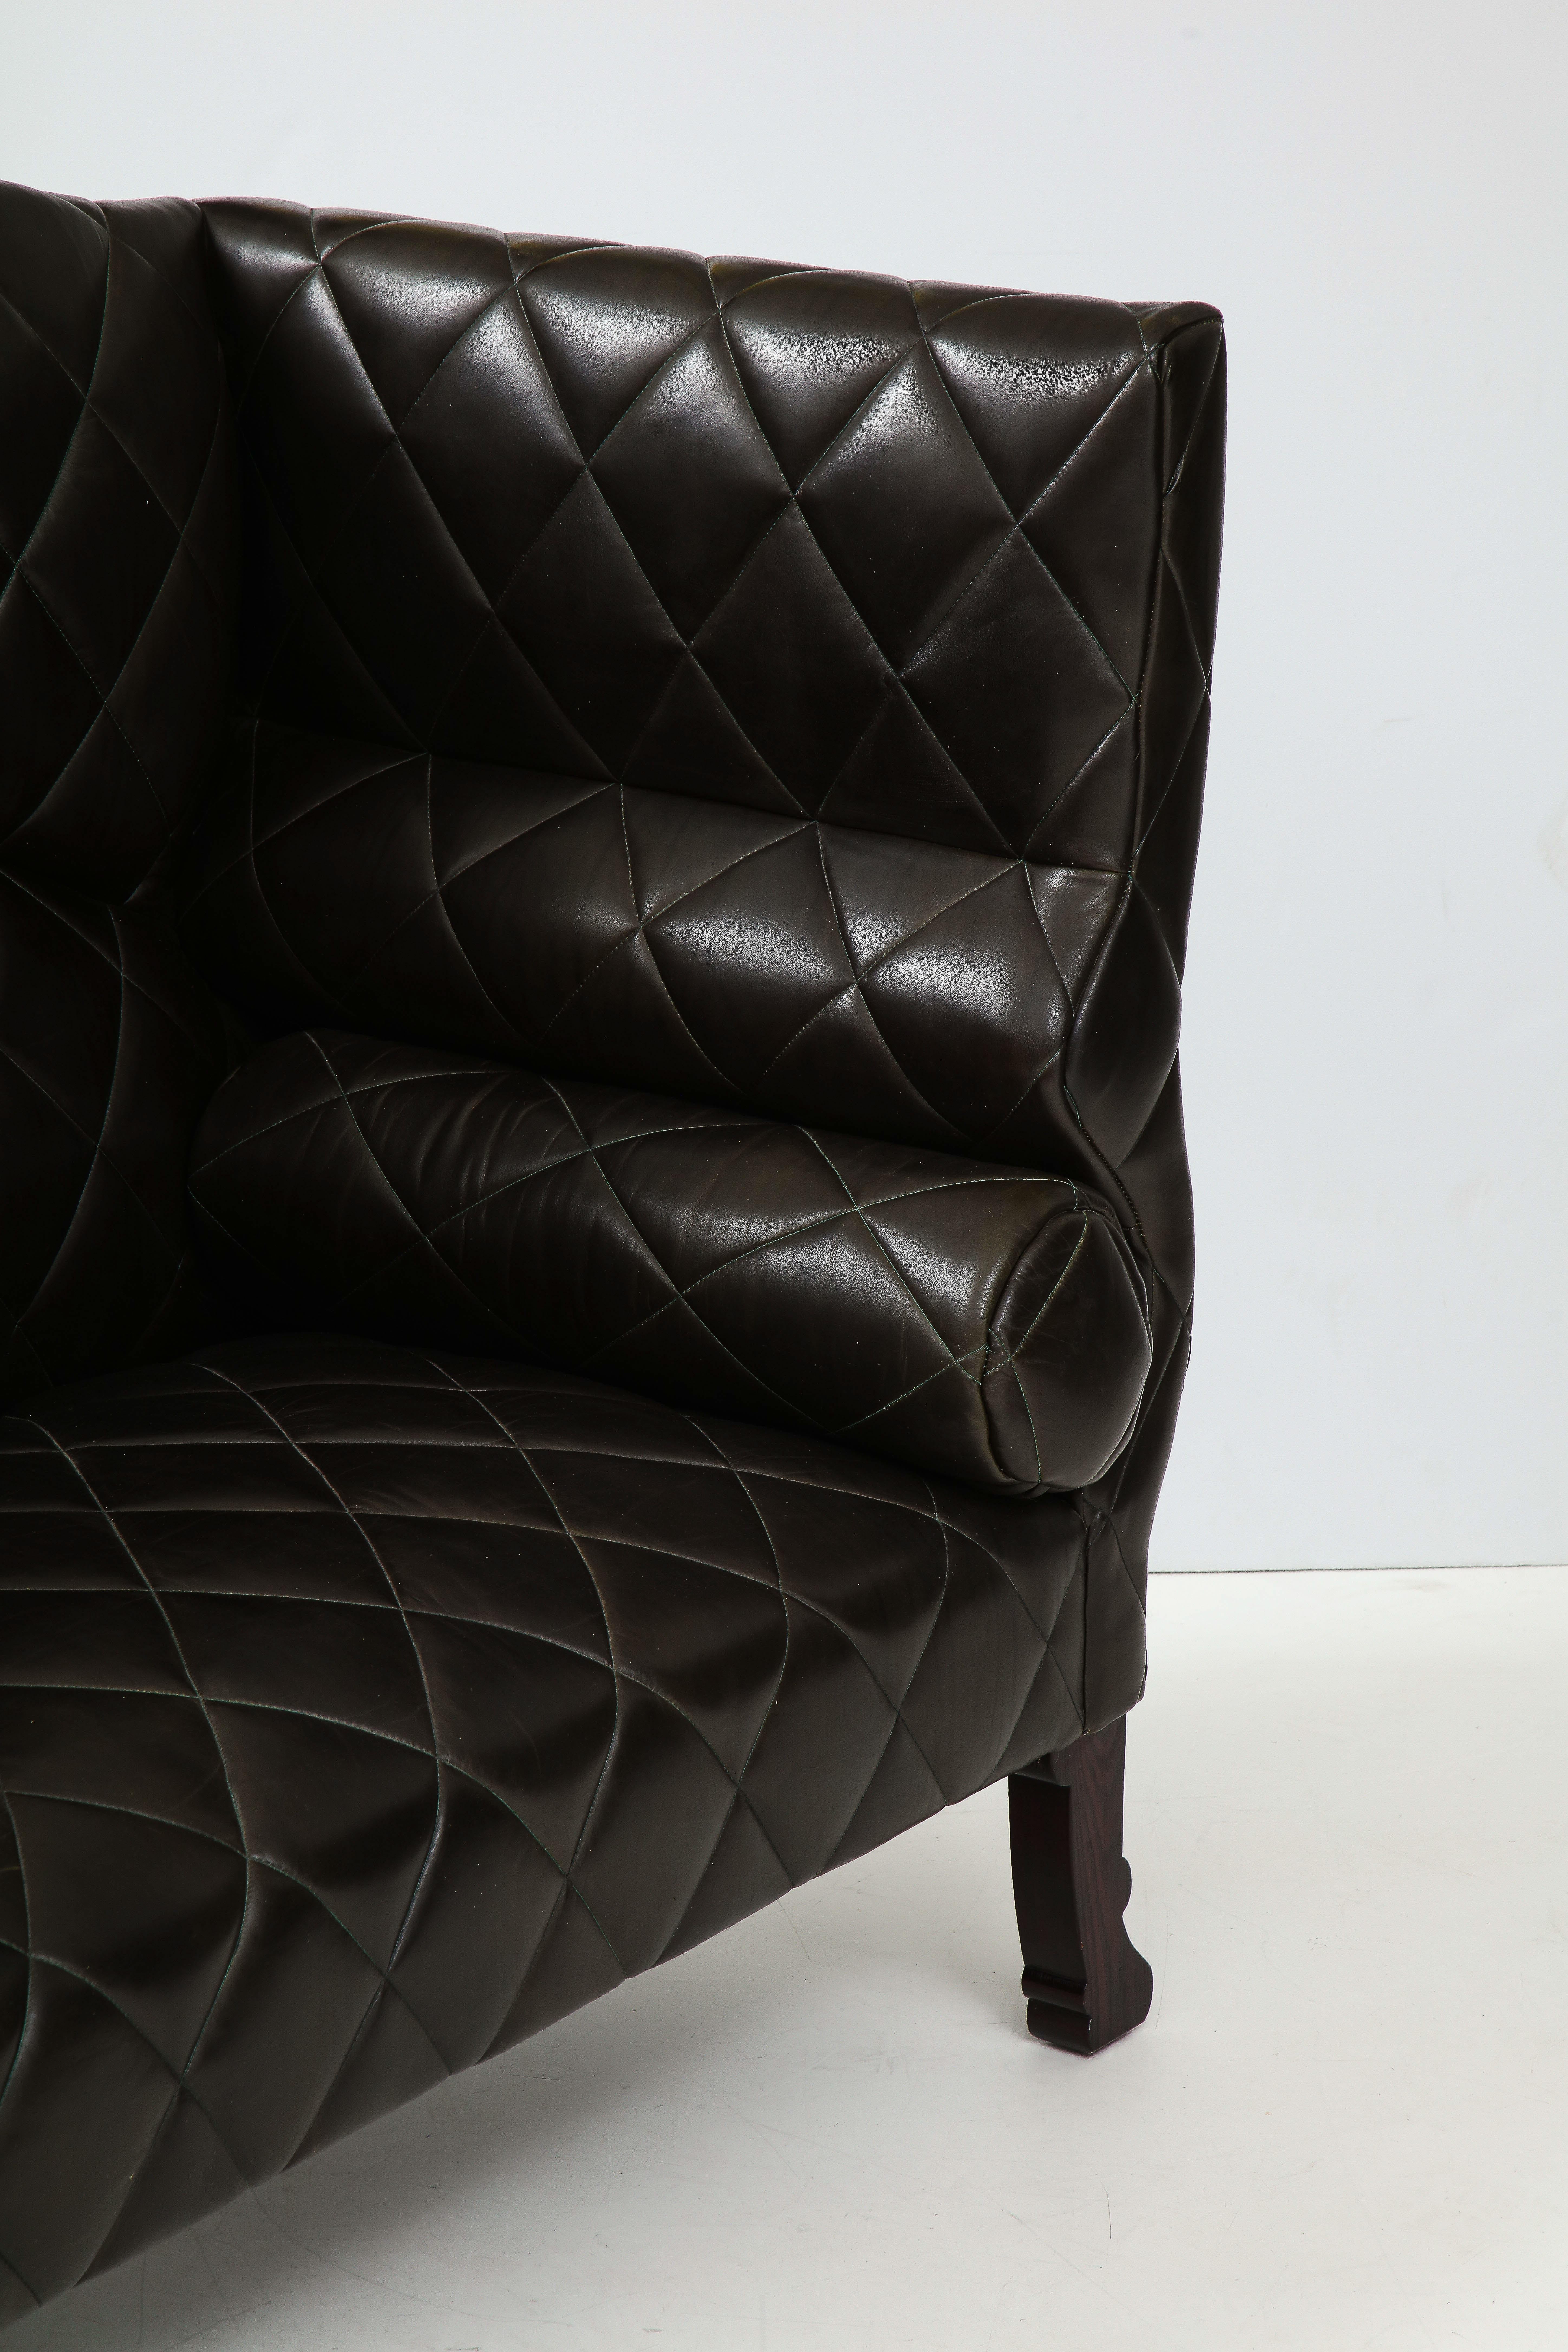 Custom George Smith 2000s Black Tufted Leather Sofa For Sale 6